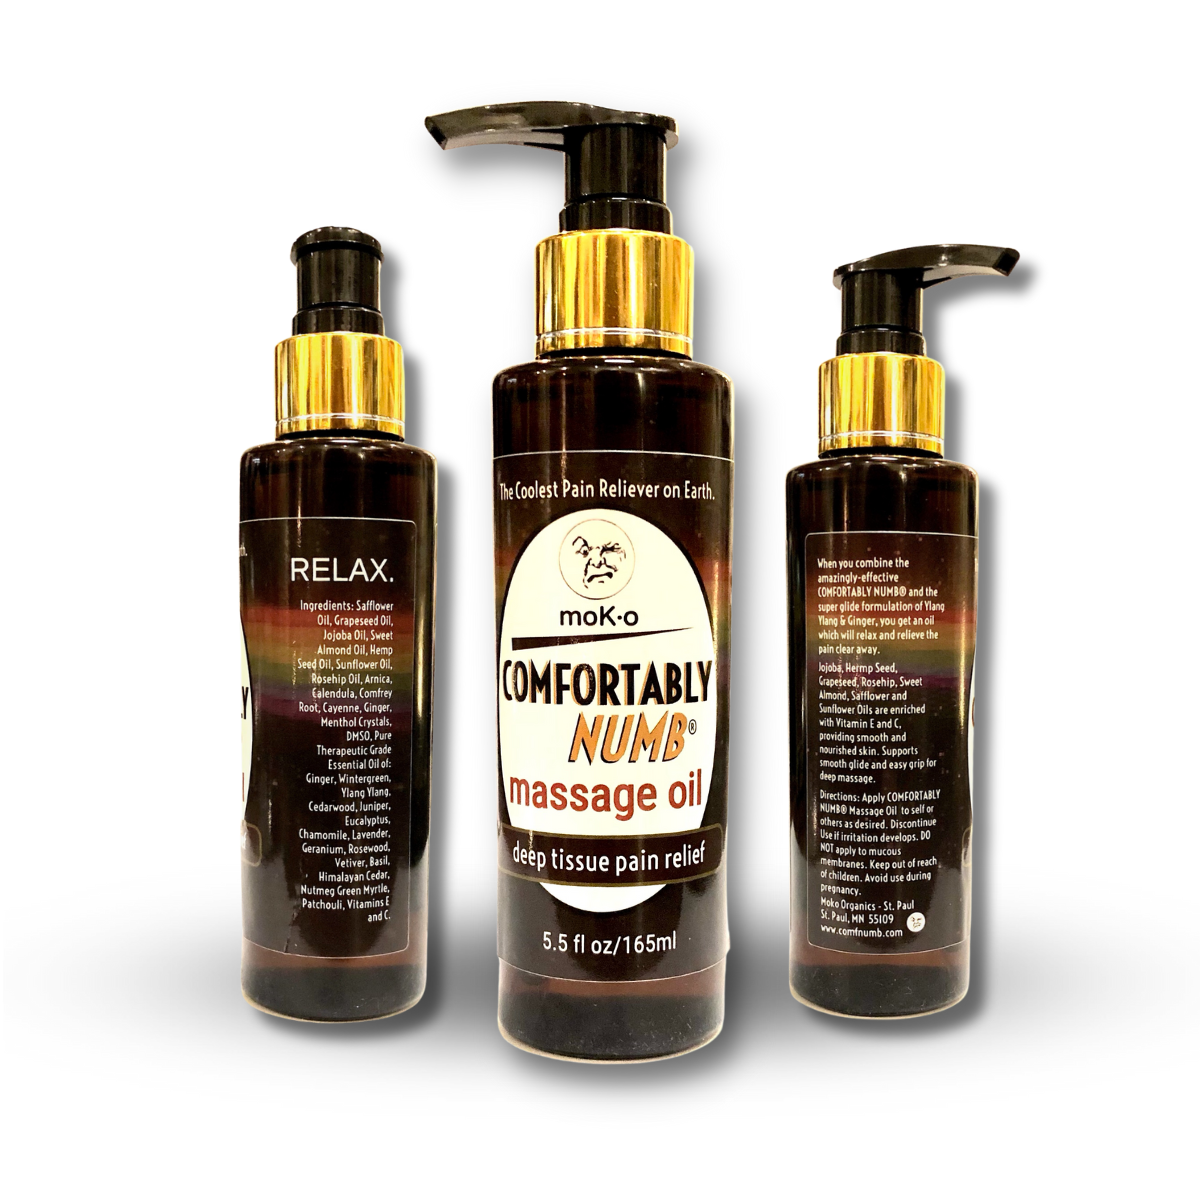 Deep Tissue massage oil, Swedish Massage Shiatsu Massage Oil, Sports Massage Oil by Comfortably Numb.